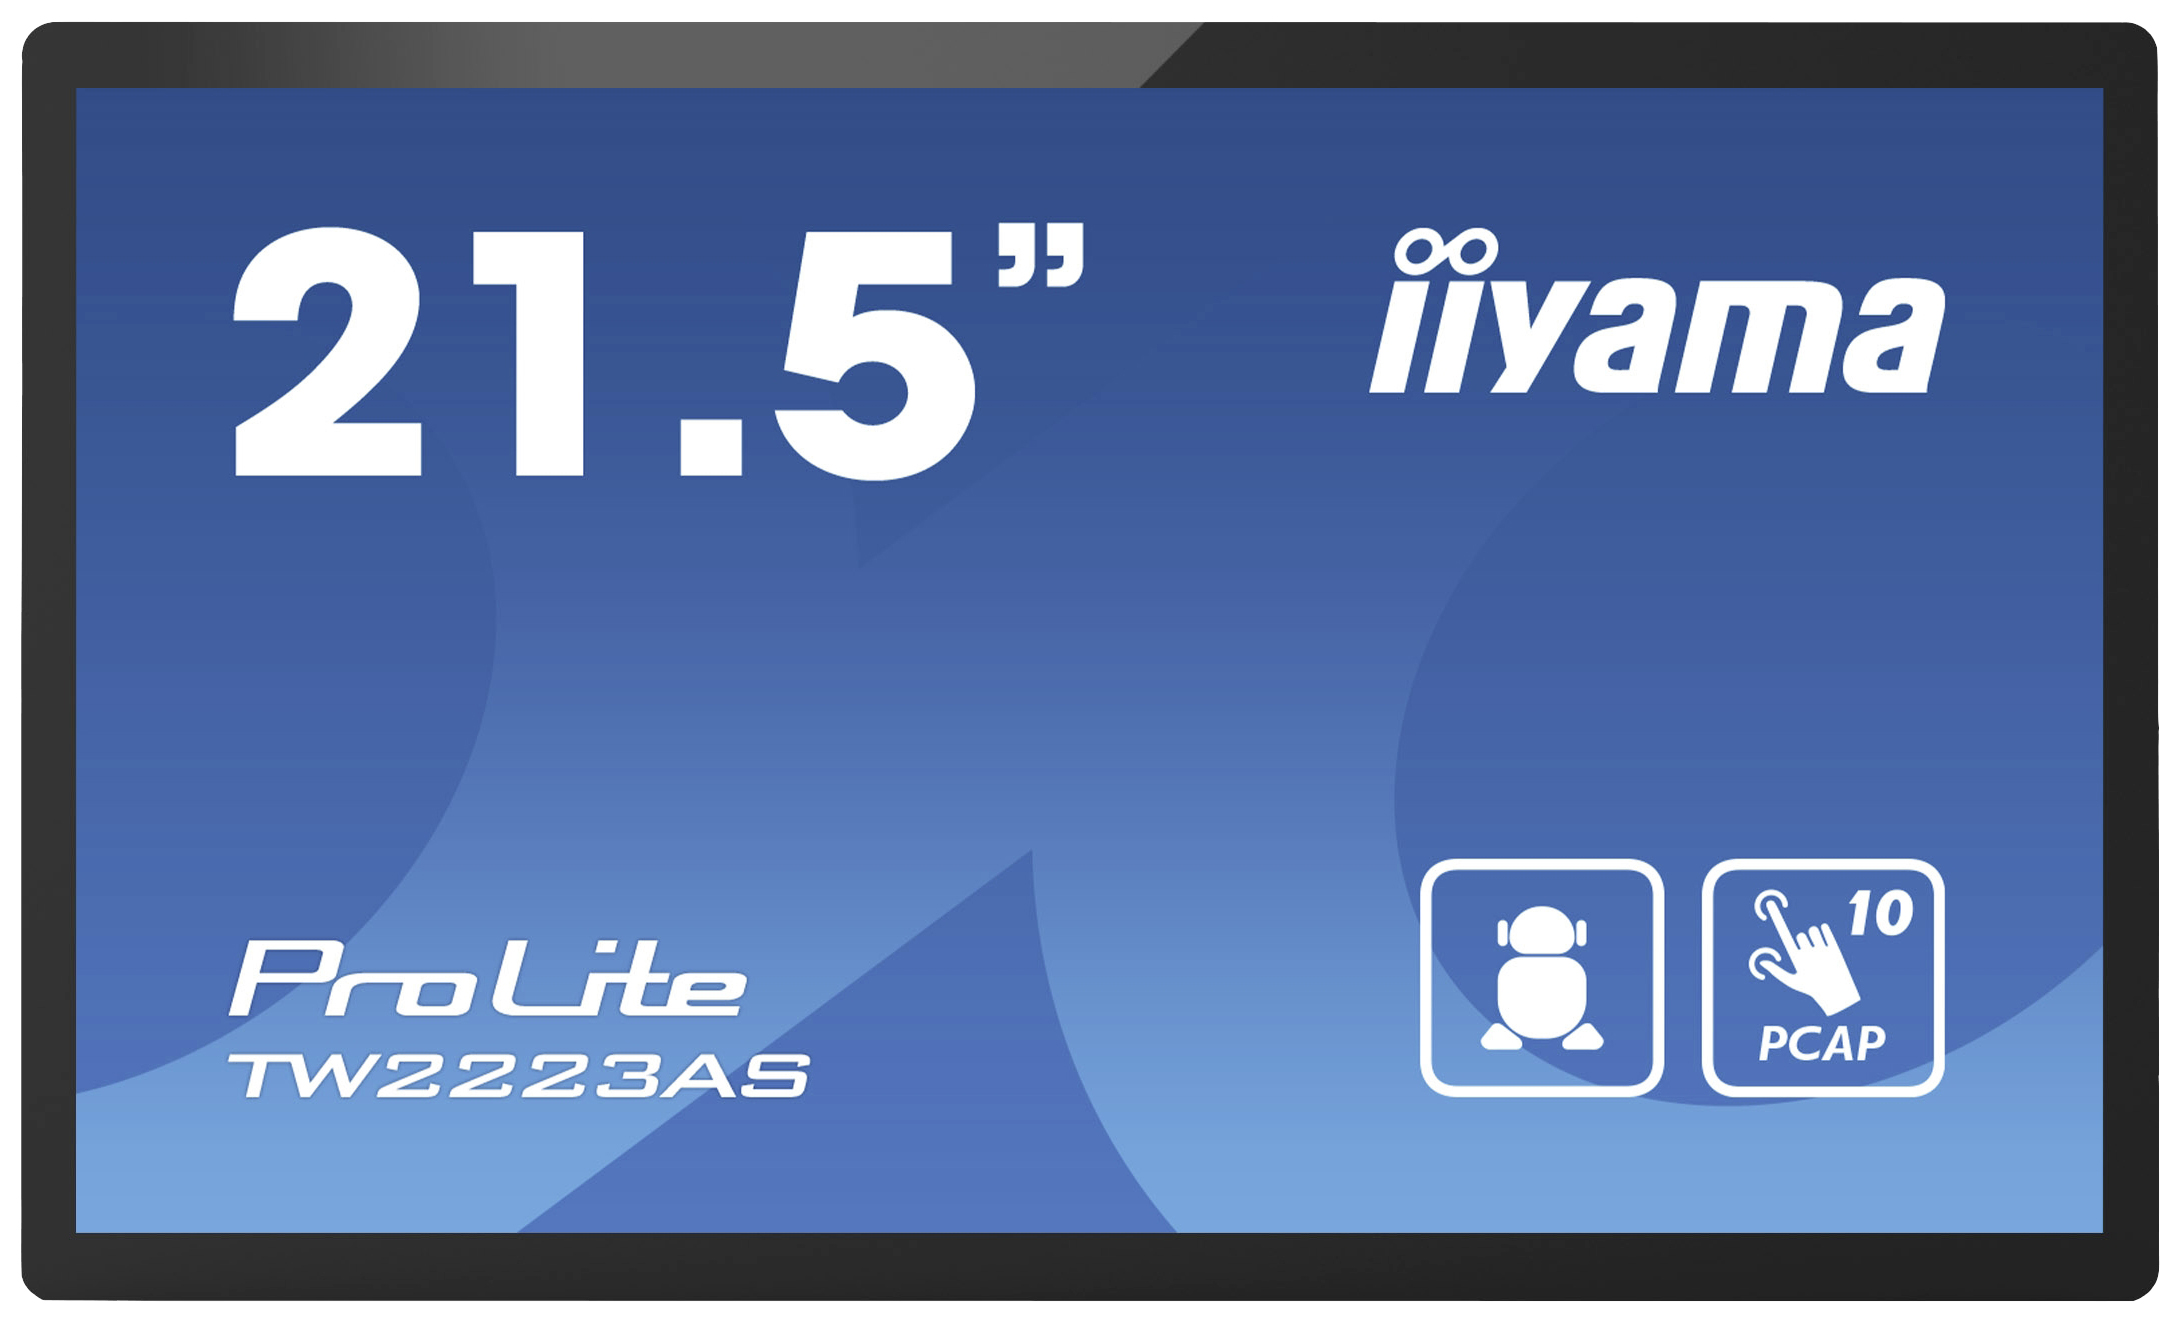 Iiyama ProLite TW2223AS-B1 Digital Signage Display 54.6cm 21.5 Zoll 1920 x 1080 Pixel 24/7